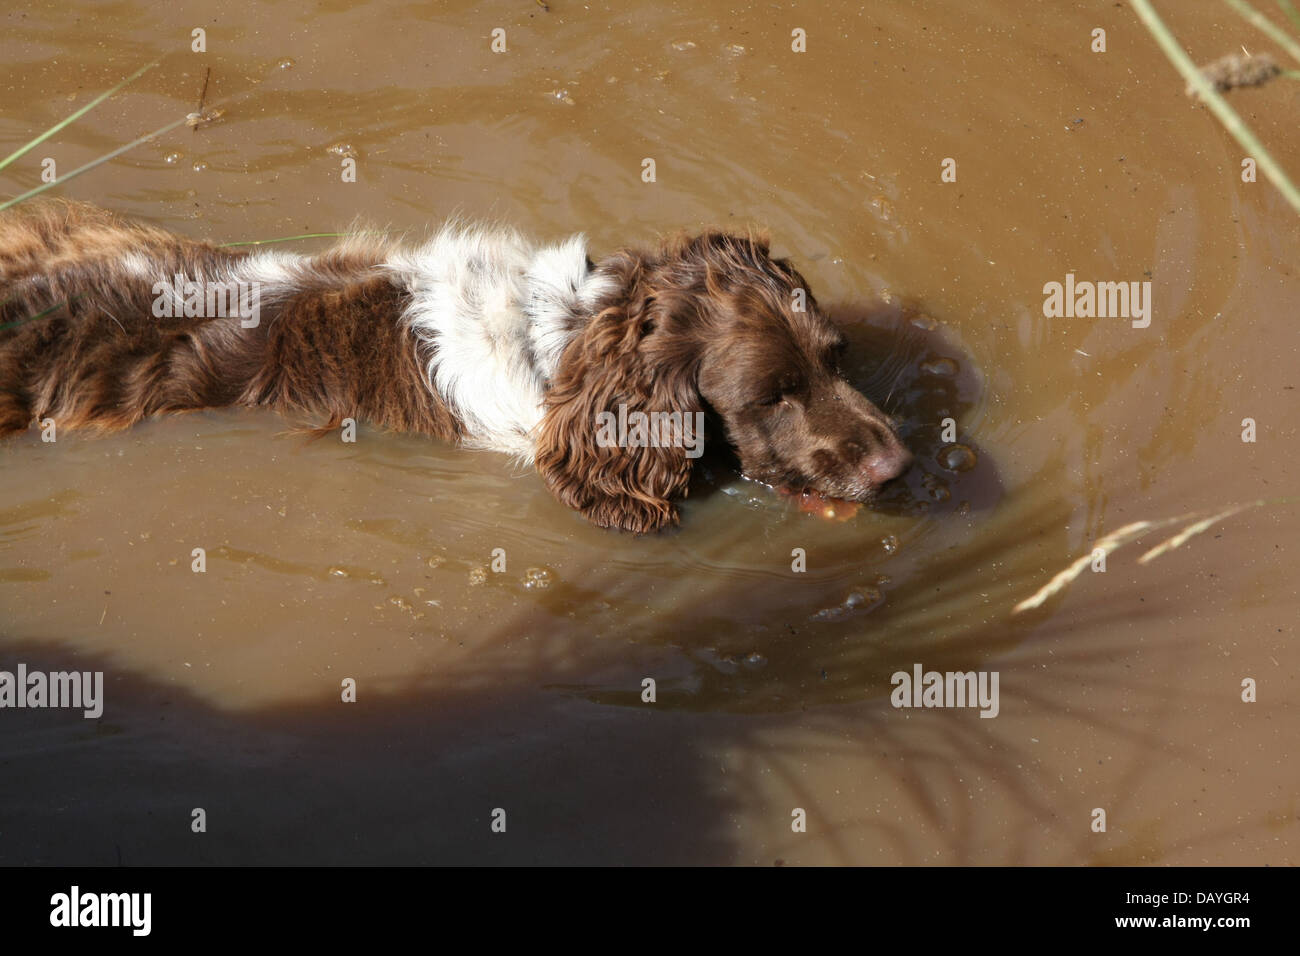 Dog in murky water Stock Photo